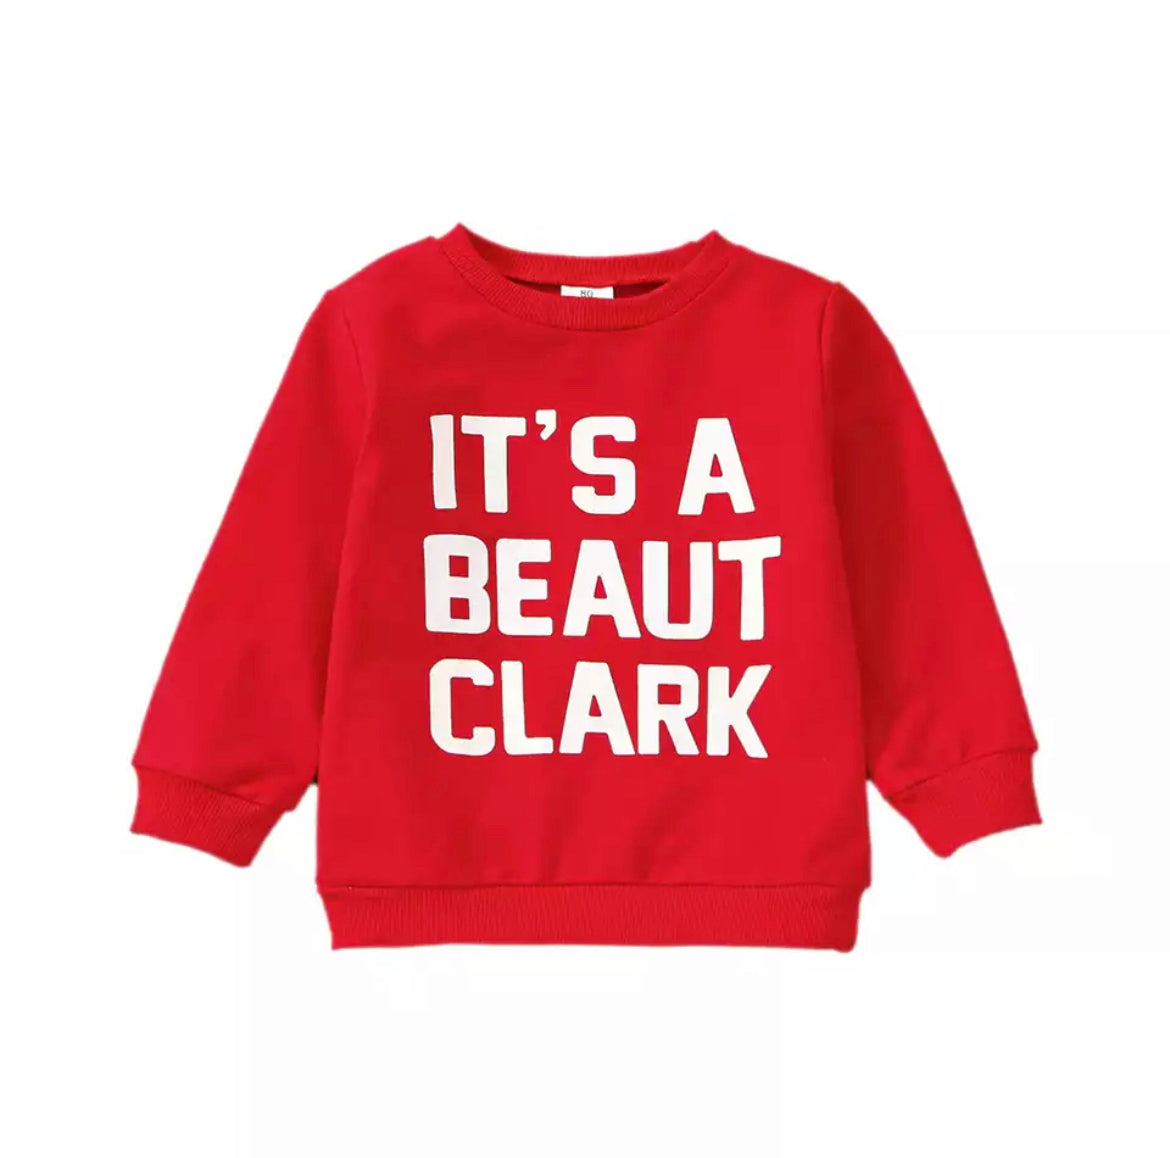 It’s a Beaut Clark Sweater